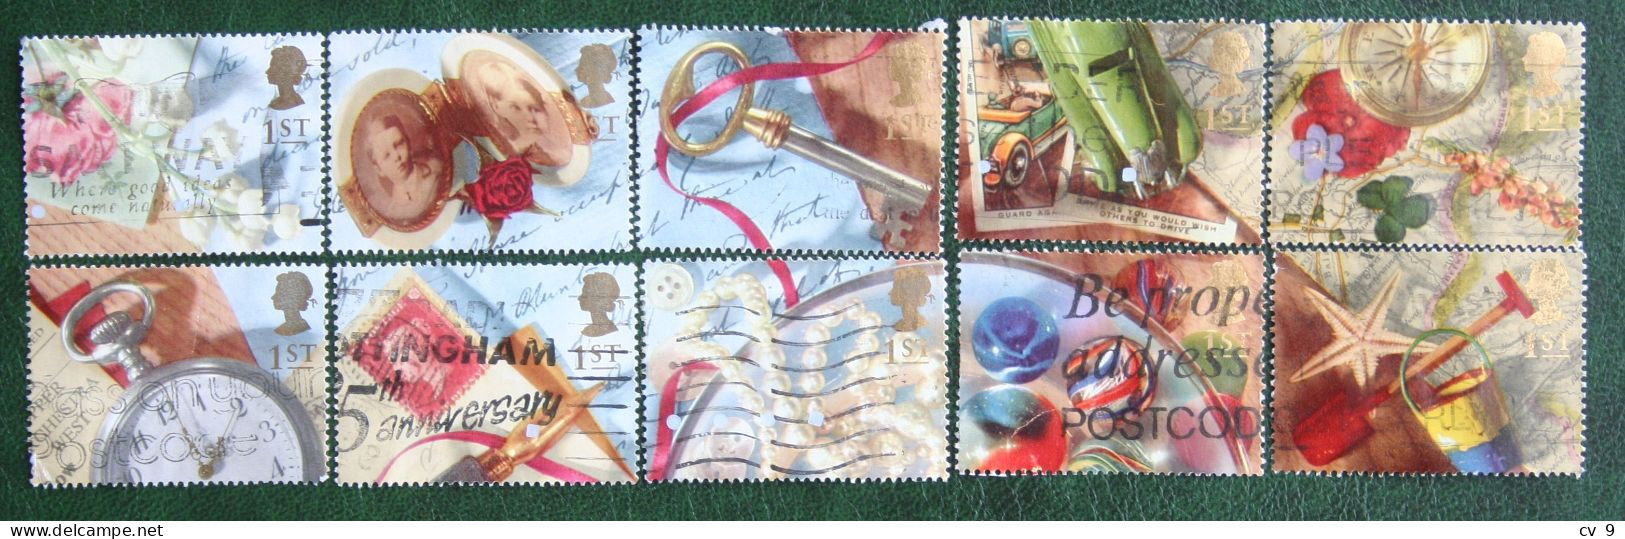 Greetings Booklet Stamps Memories (Mi 1377-1386) 1992 Used Gebruikt Oblitere ENGLAND GRANDE-BRETAGNE GB GREAT BRITAIN - Usati